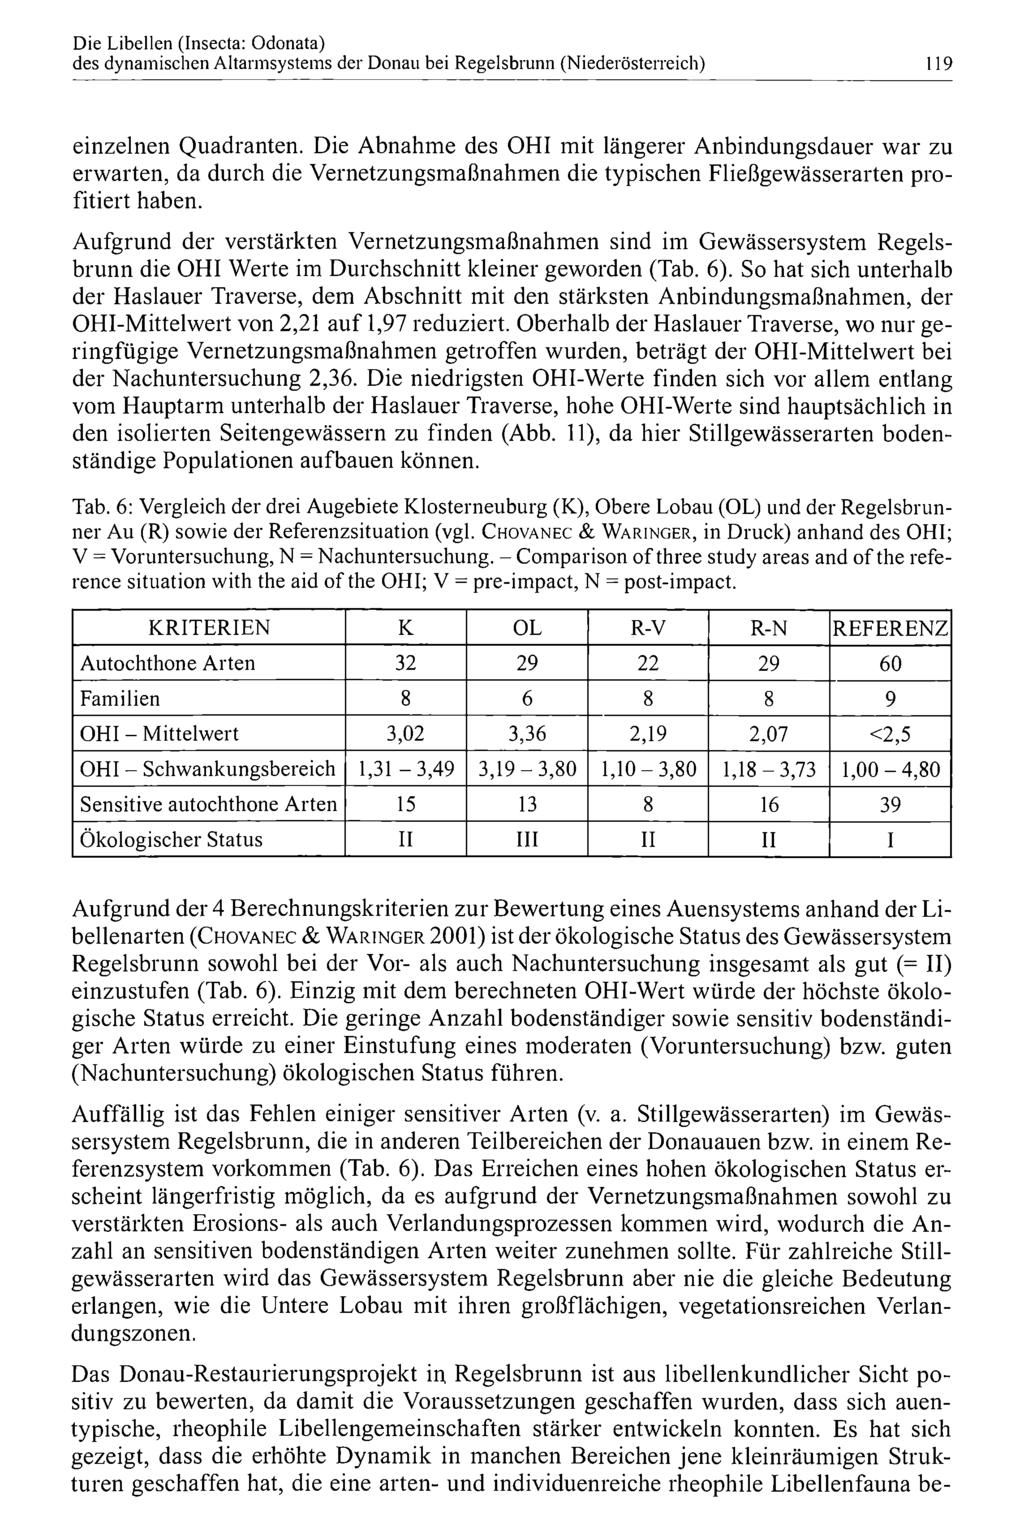 Die Libellen (Insecta: Odonata) Zool.-Bot. Ges. Österreich, Austria; download unter www.biologiezentrum.